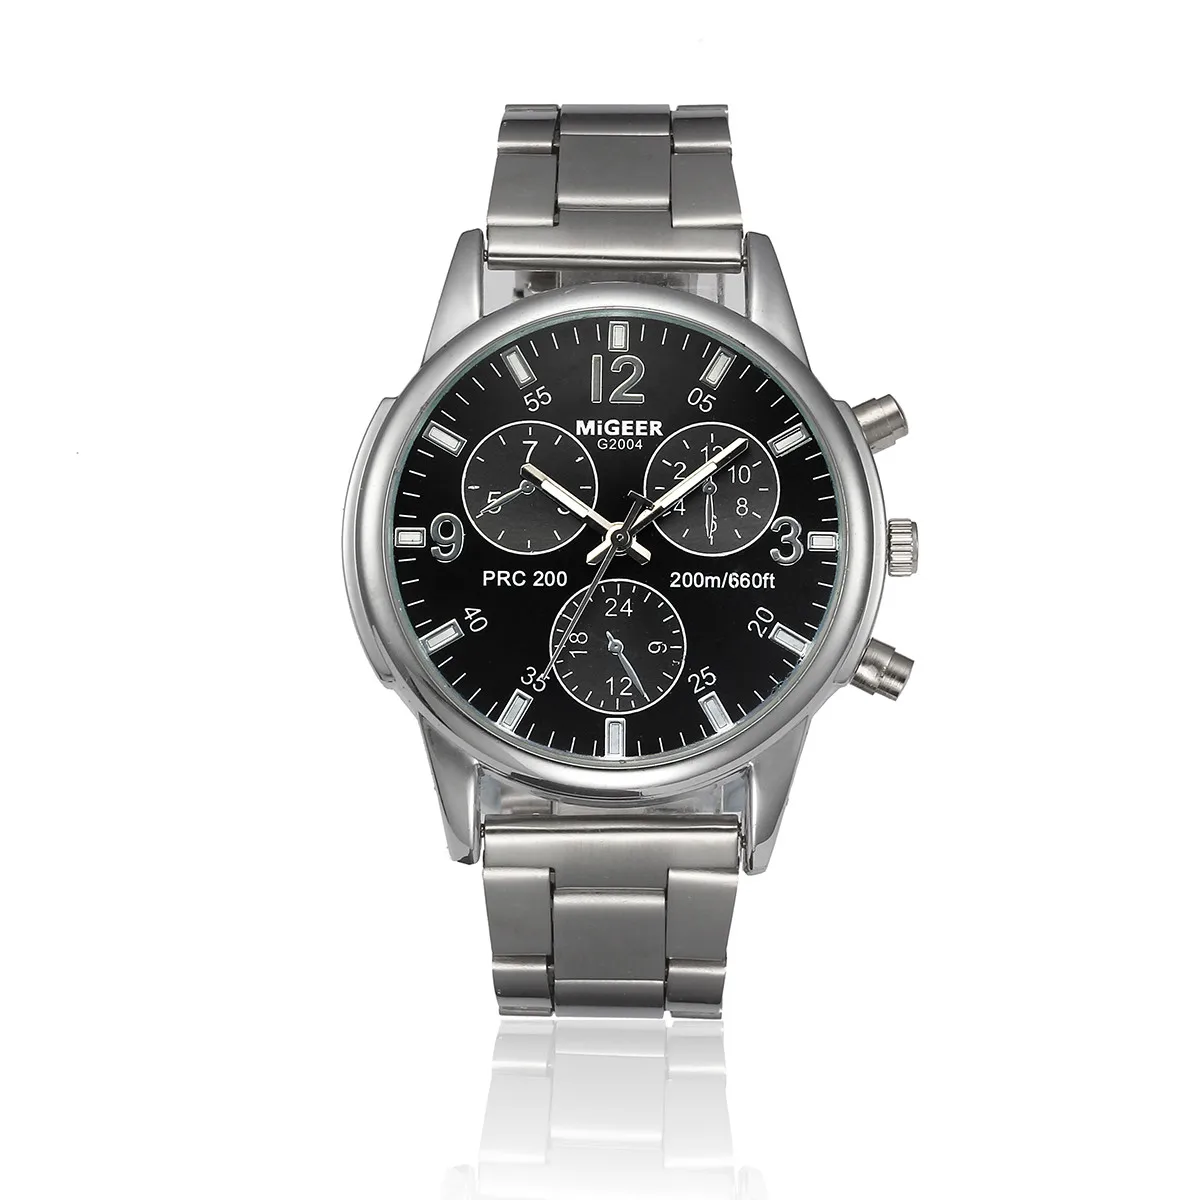 

Watch Men Fashion 2021 Crystal Stainless Steel Analog Quartz Wrist Watch Bracelet Relogios Masculino Erkek Kol Saati Zegarek